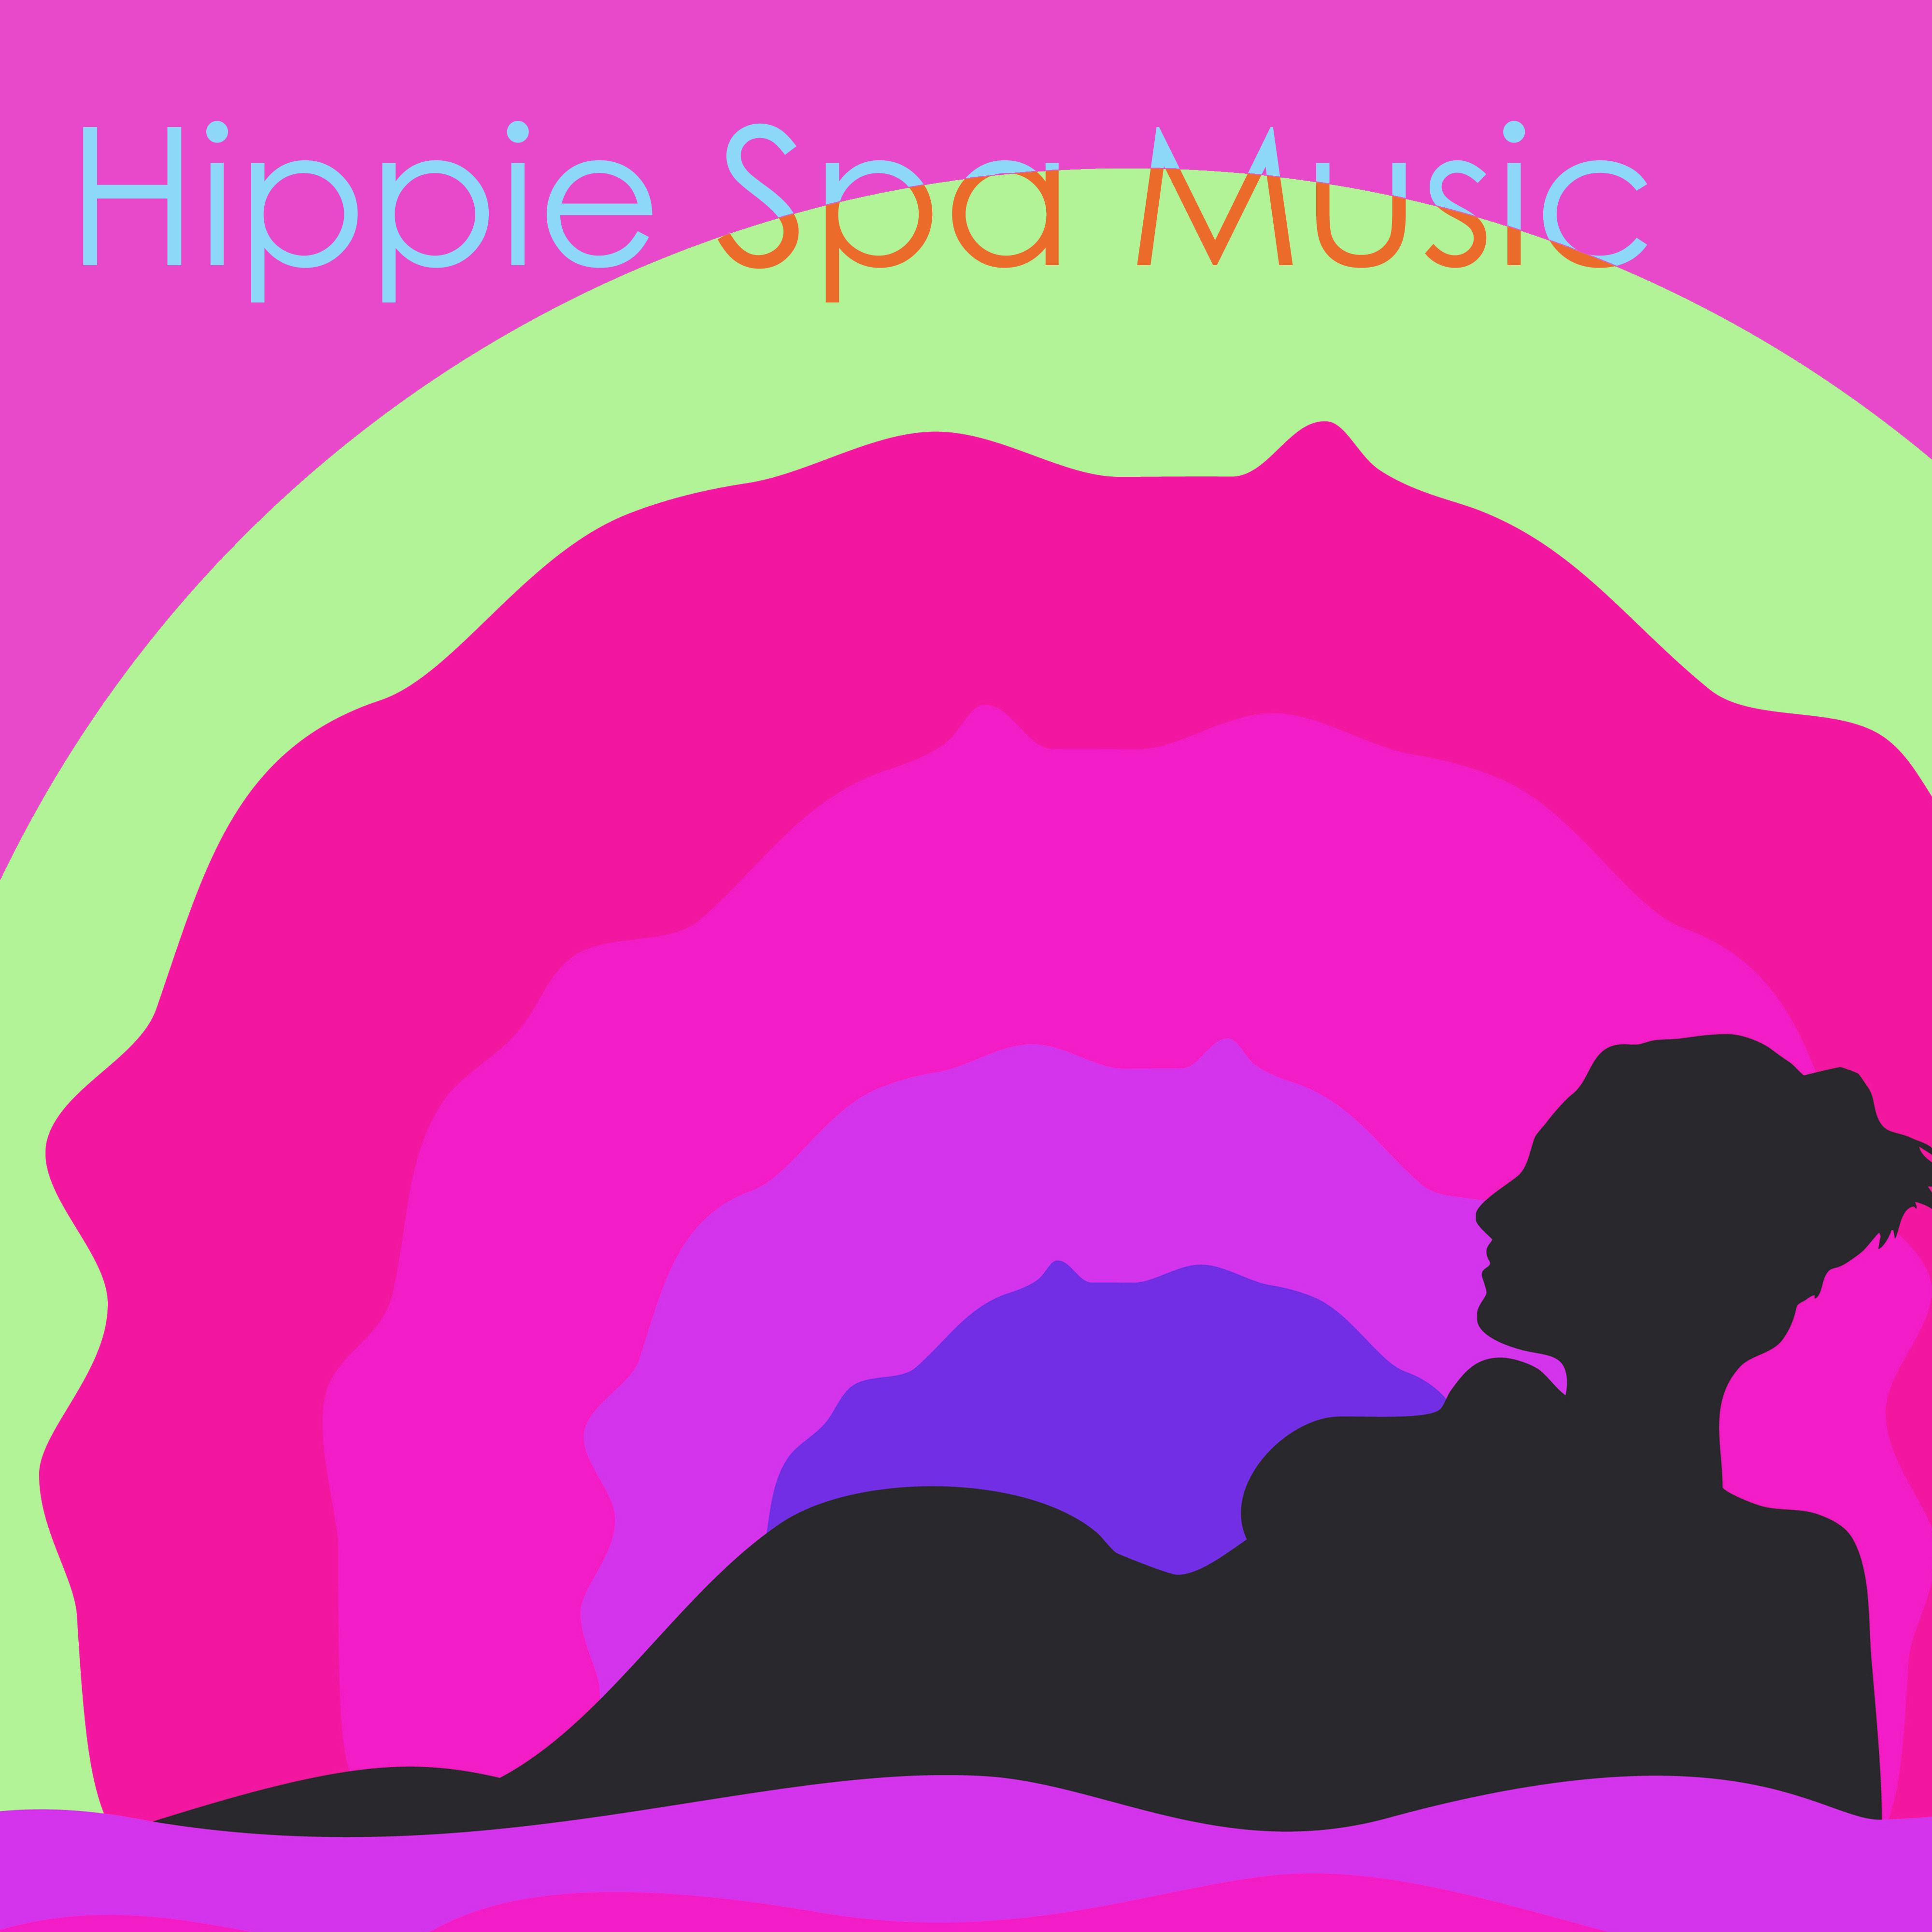 Hippy Songs